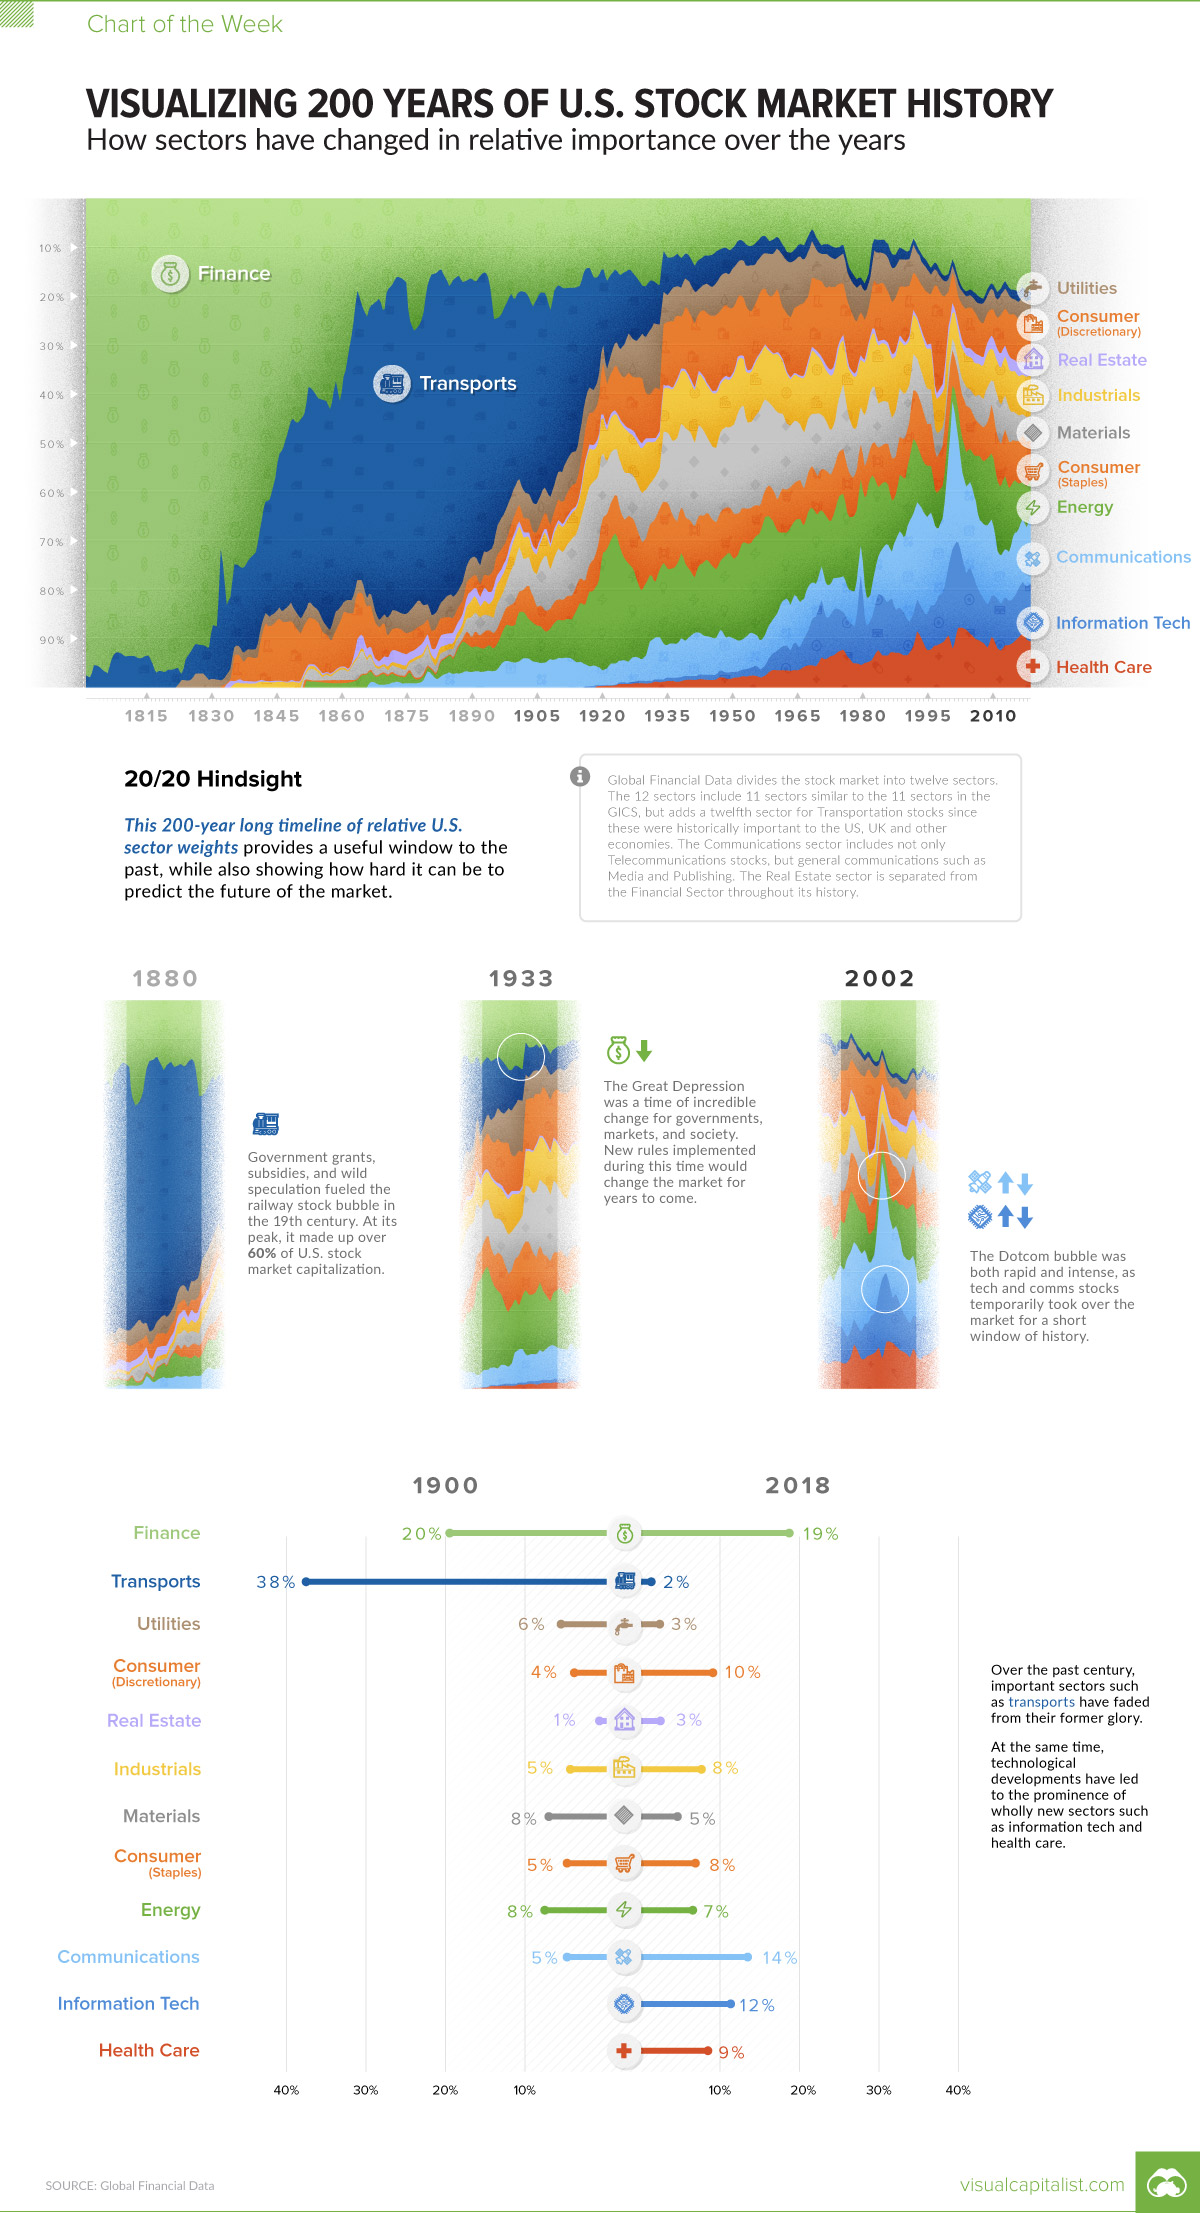 Visualizing 200 Years of U.S. Stock Market Sectors